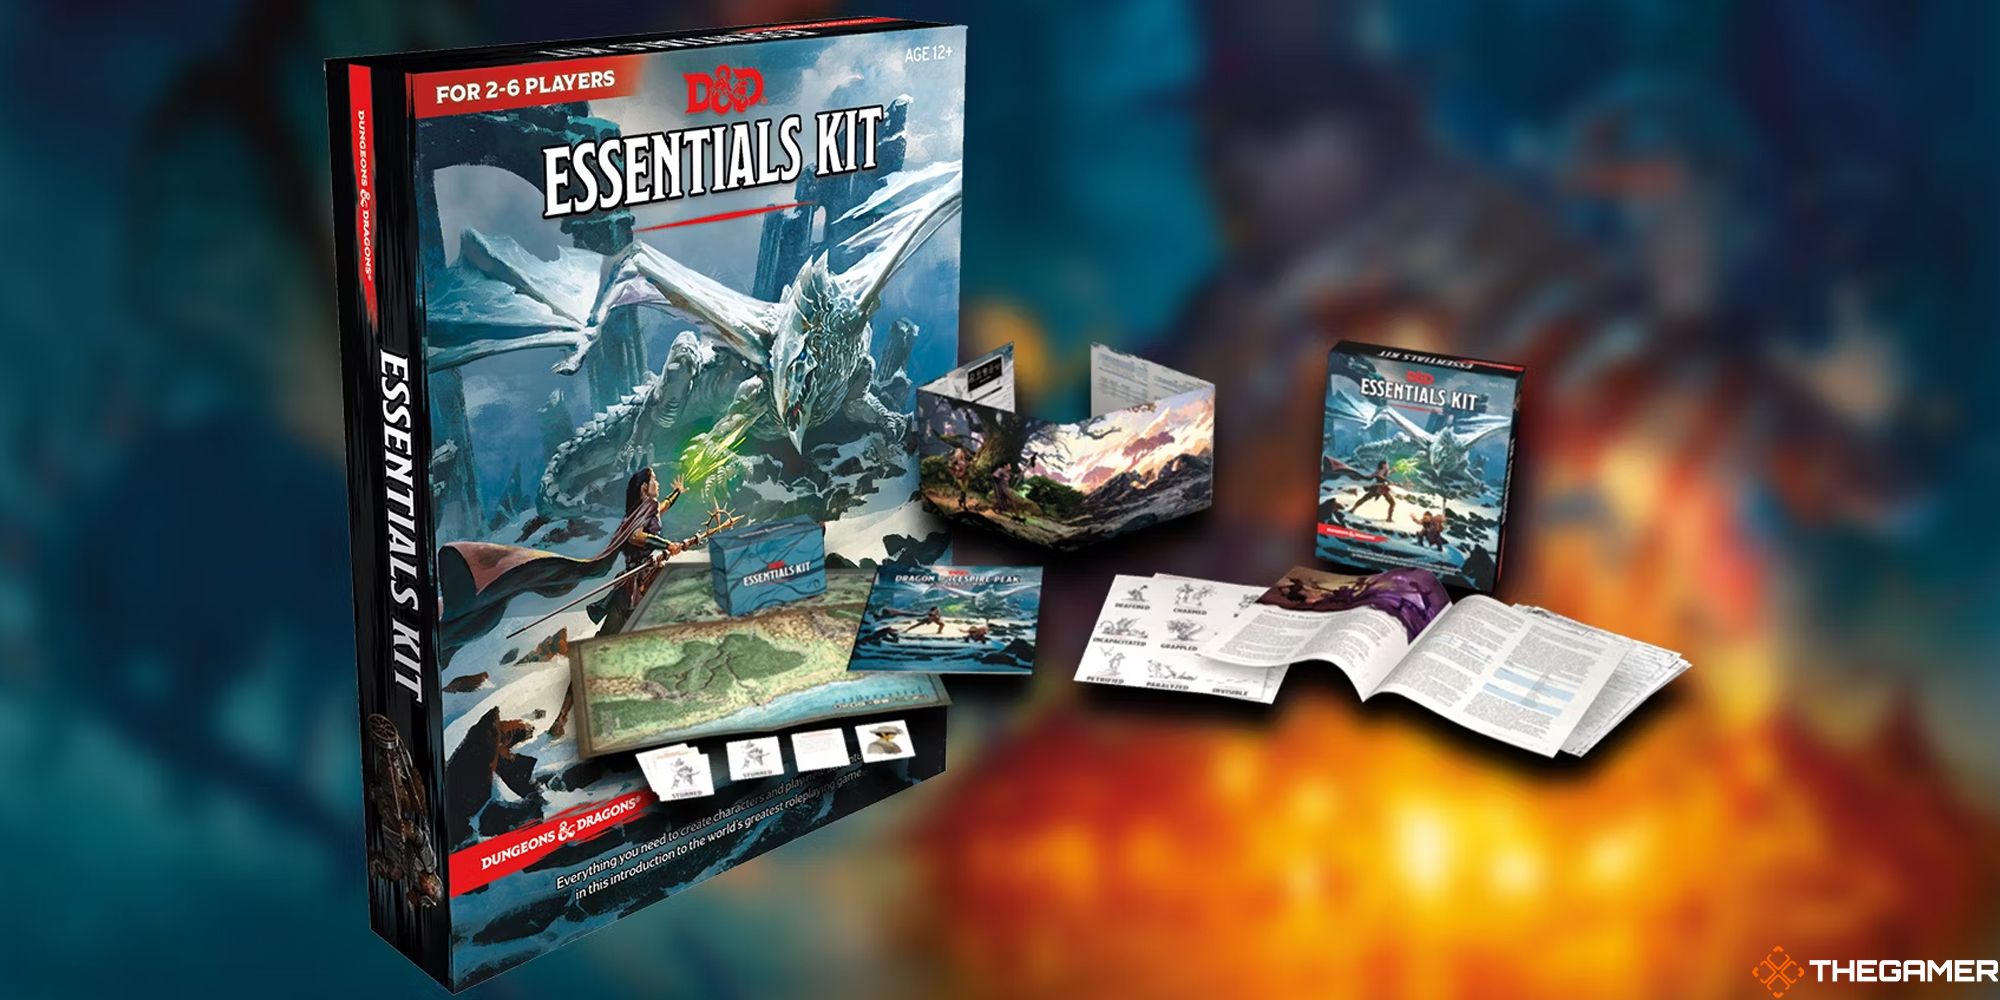 The D&D Essentials Kit